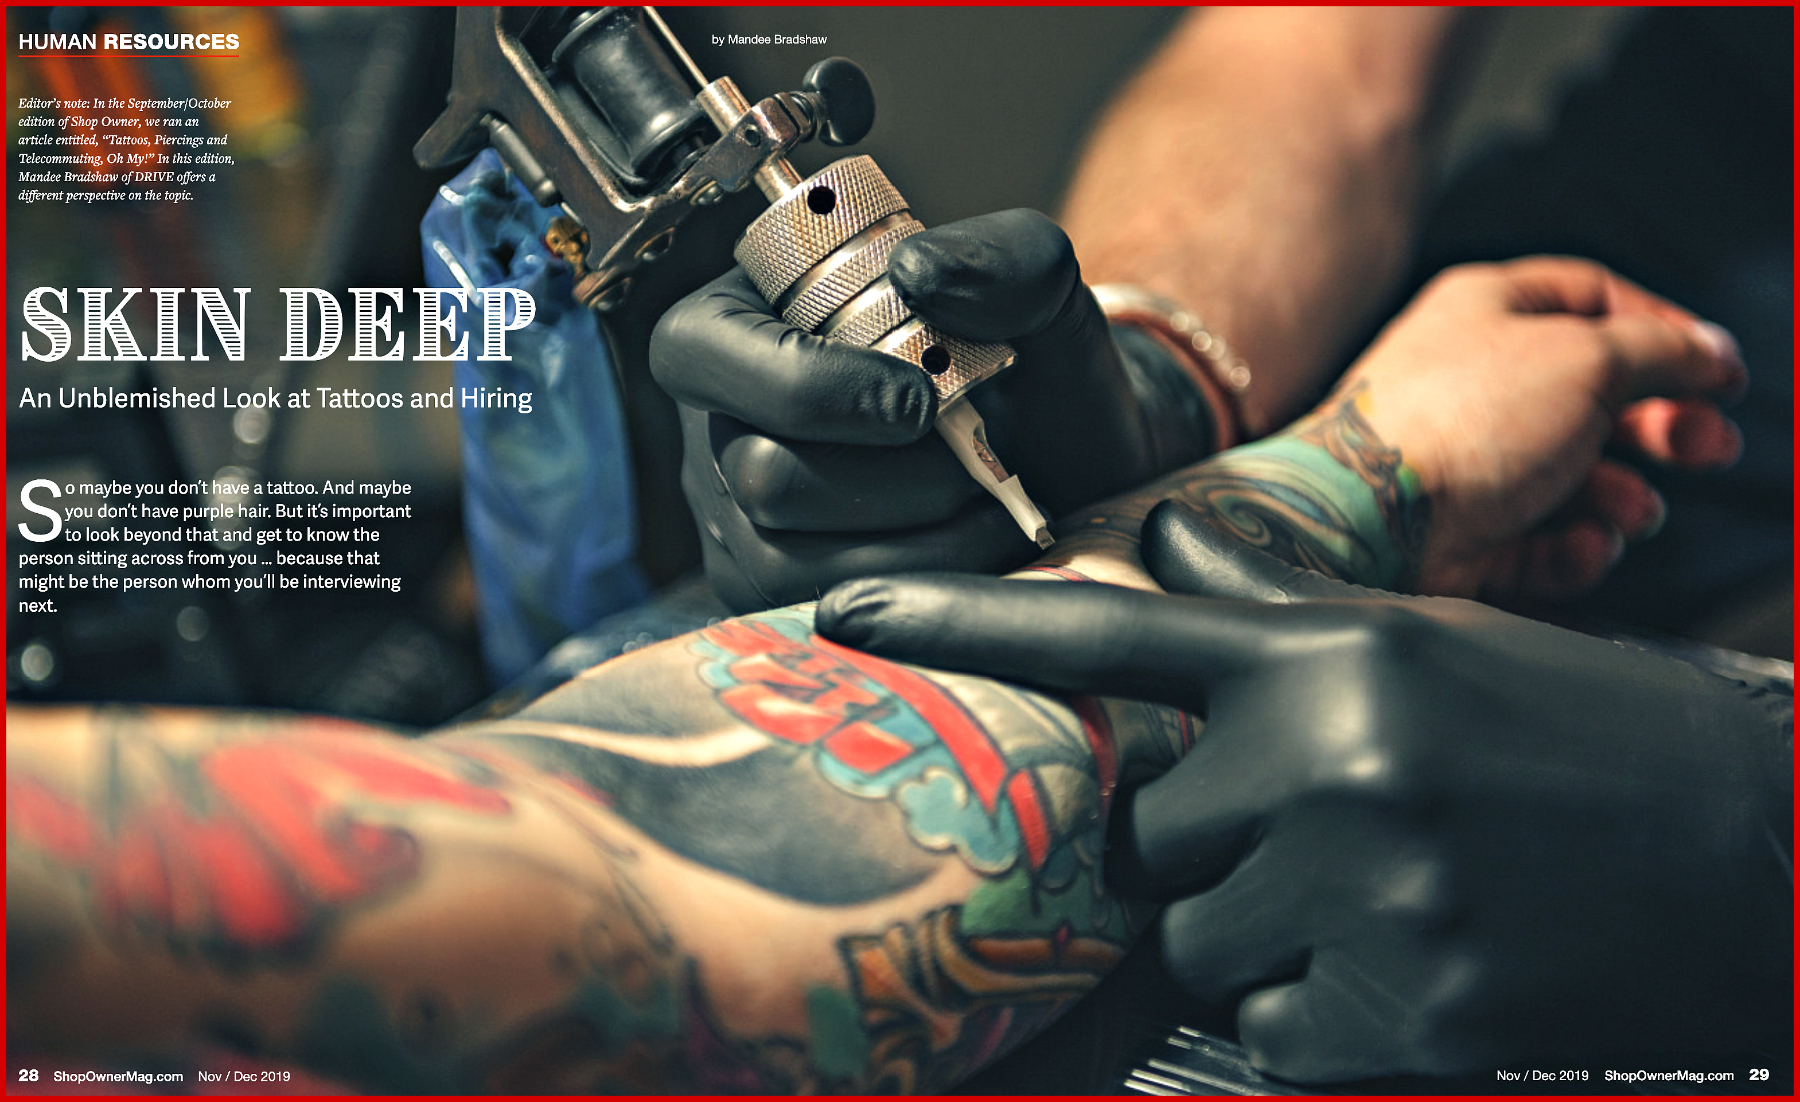 Top 3 Tattoo Critics | INKED RITUAL Tattoo Care